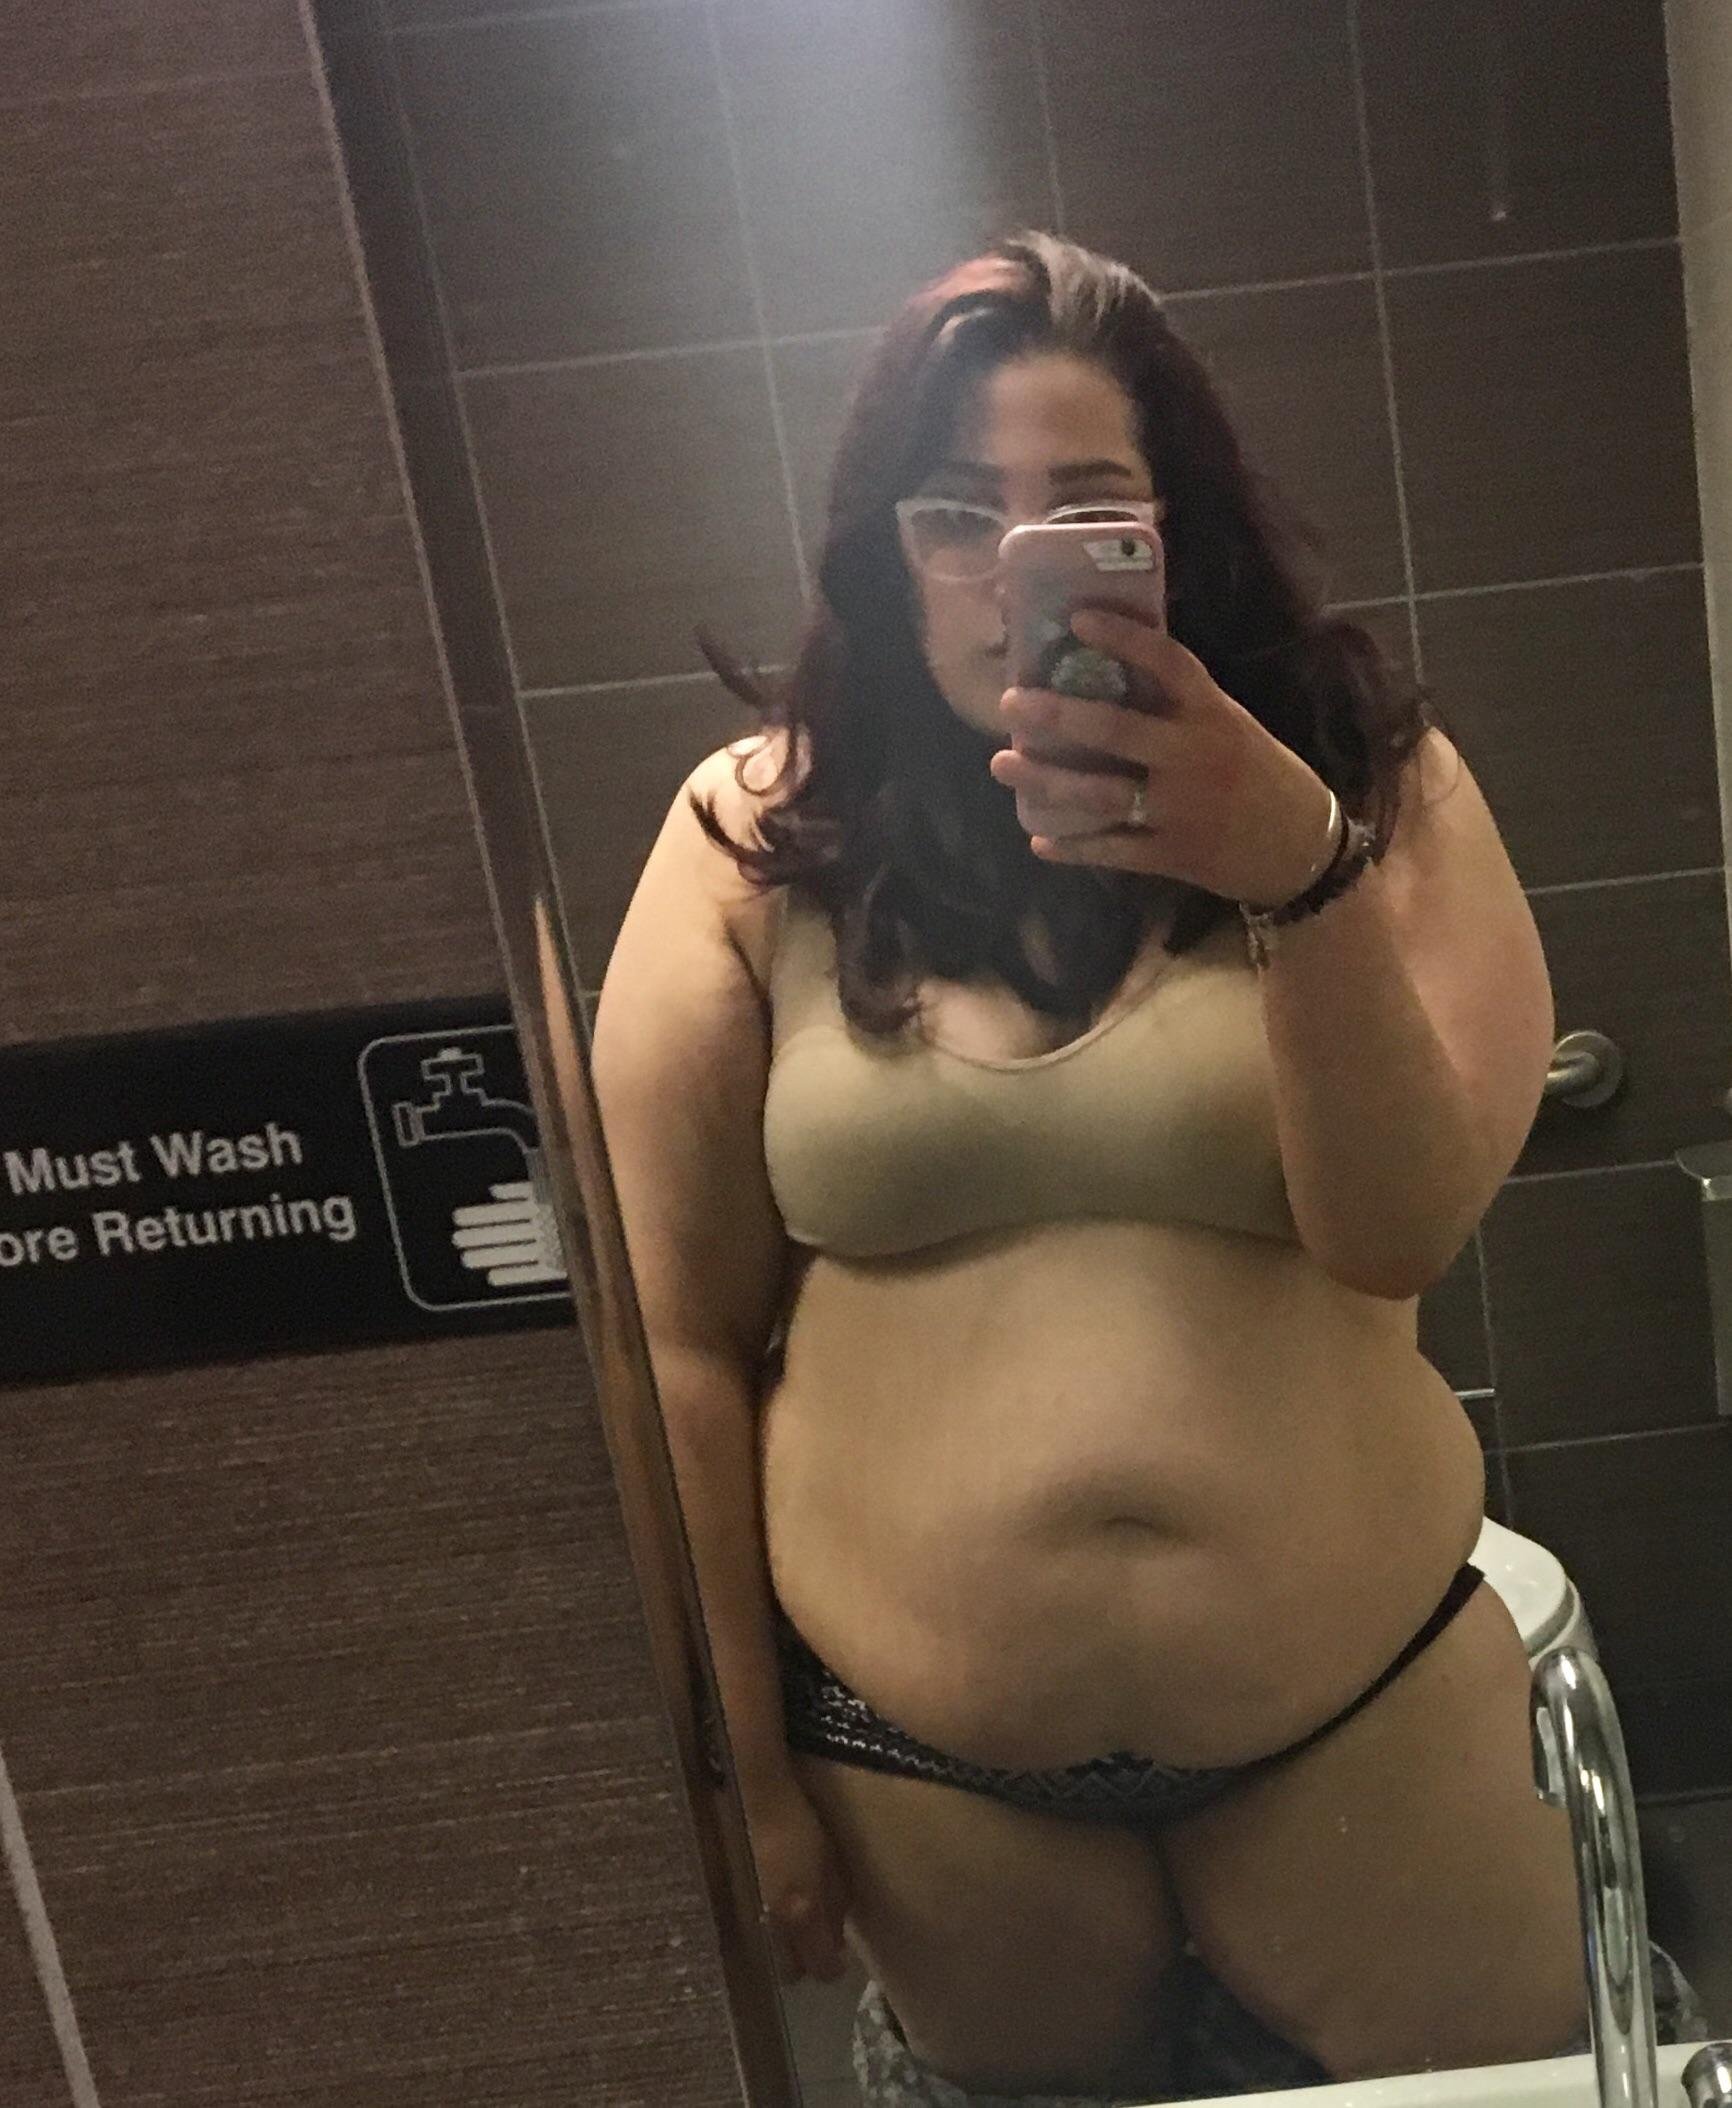 Public bathroom mirror pic.. showing off my figure